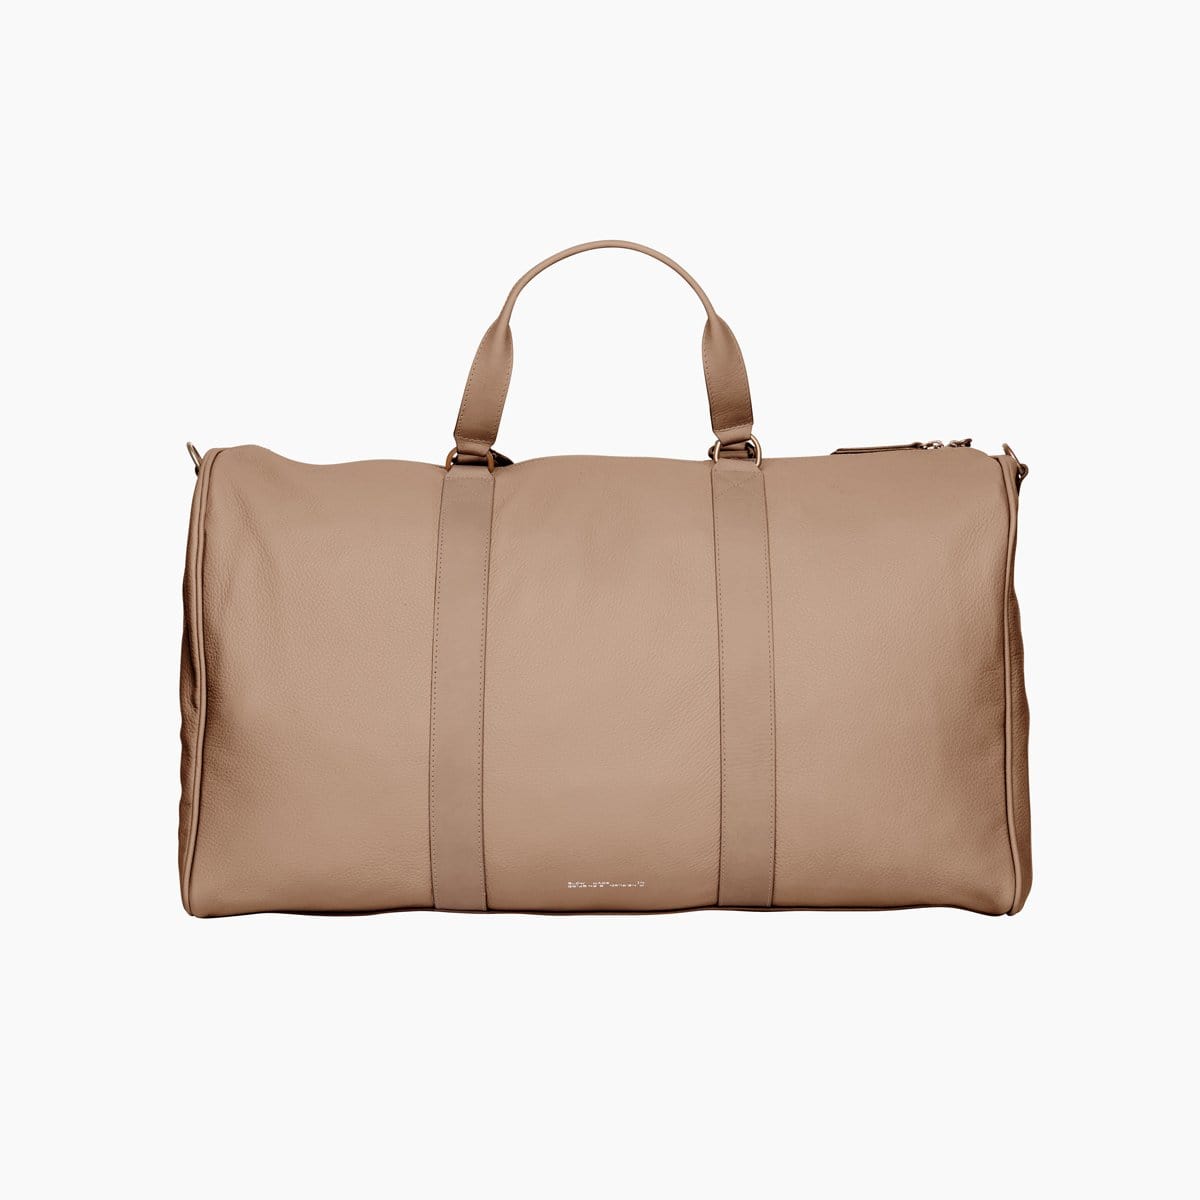 Beatnik & Sons Leather handbags the Kerouac duffle bag